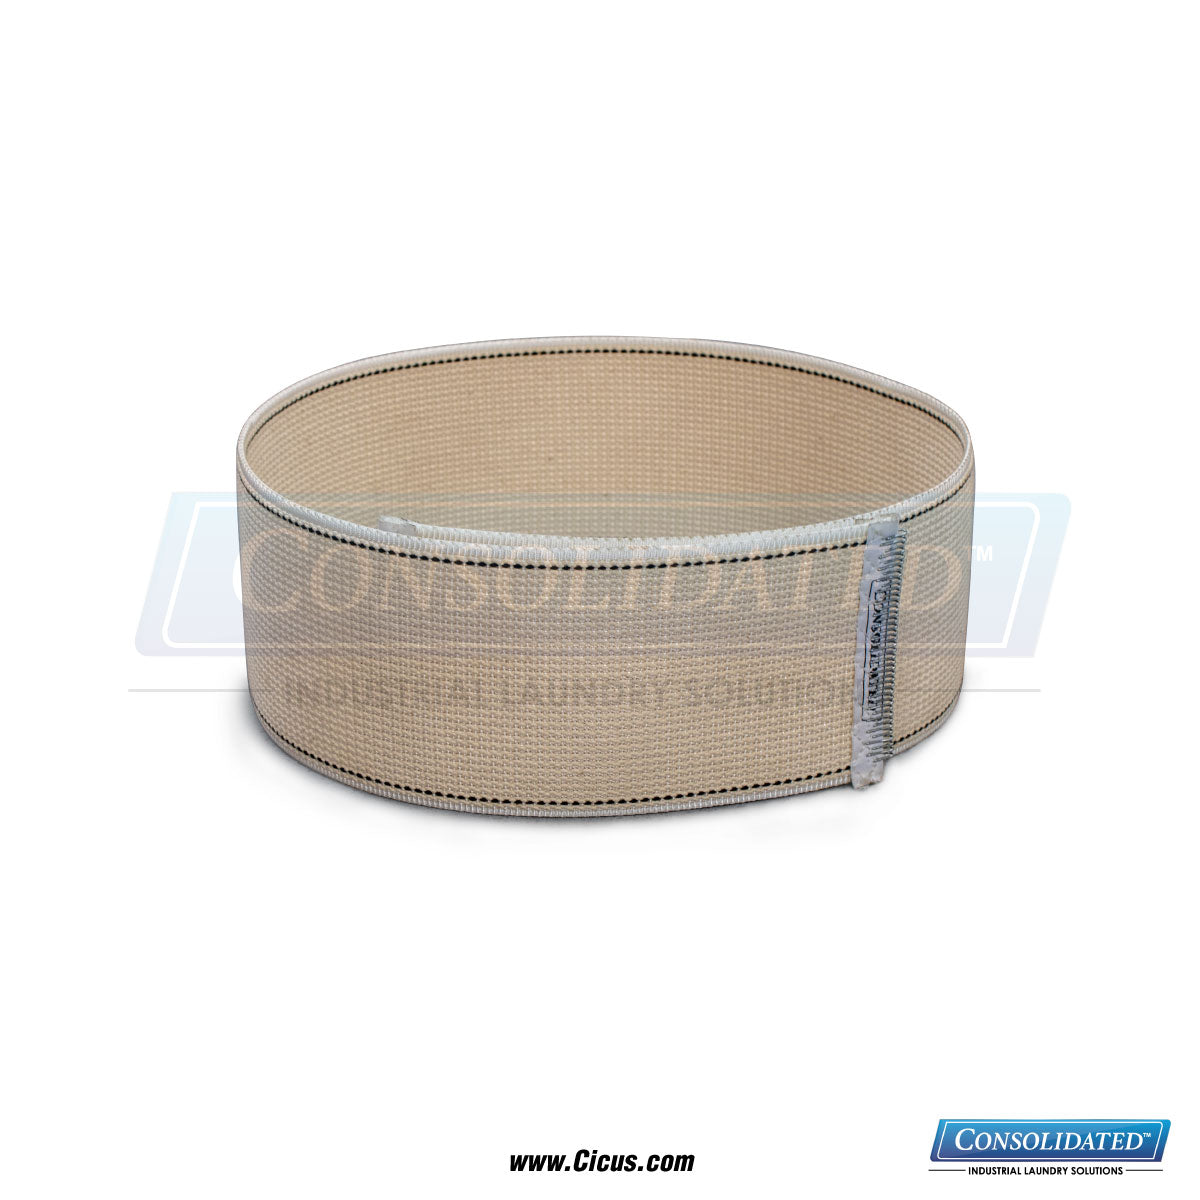 CIC Exclusive Chicago Dryer® Cotton Canvas Belt - [1001-188]